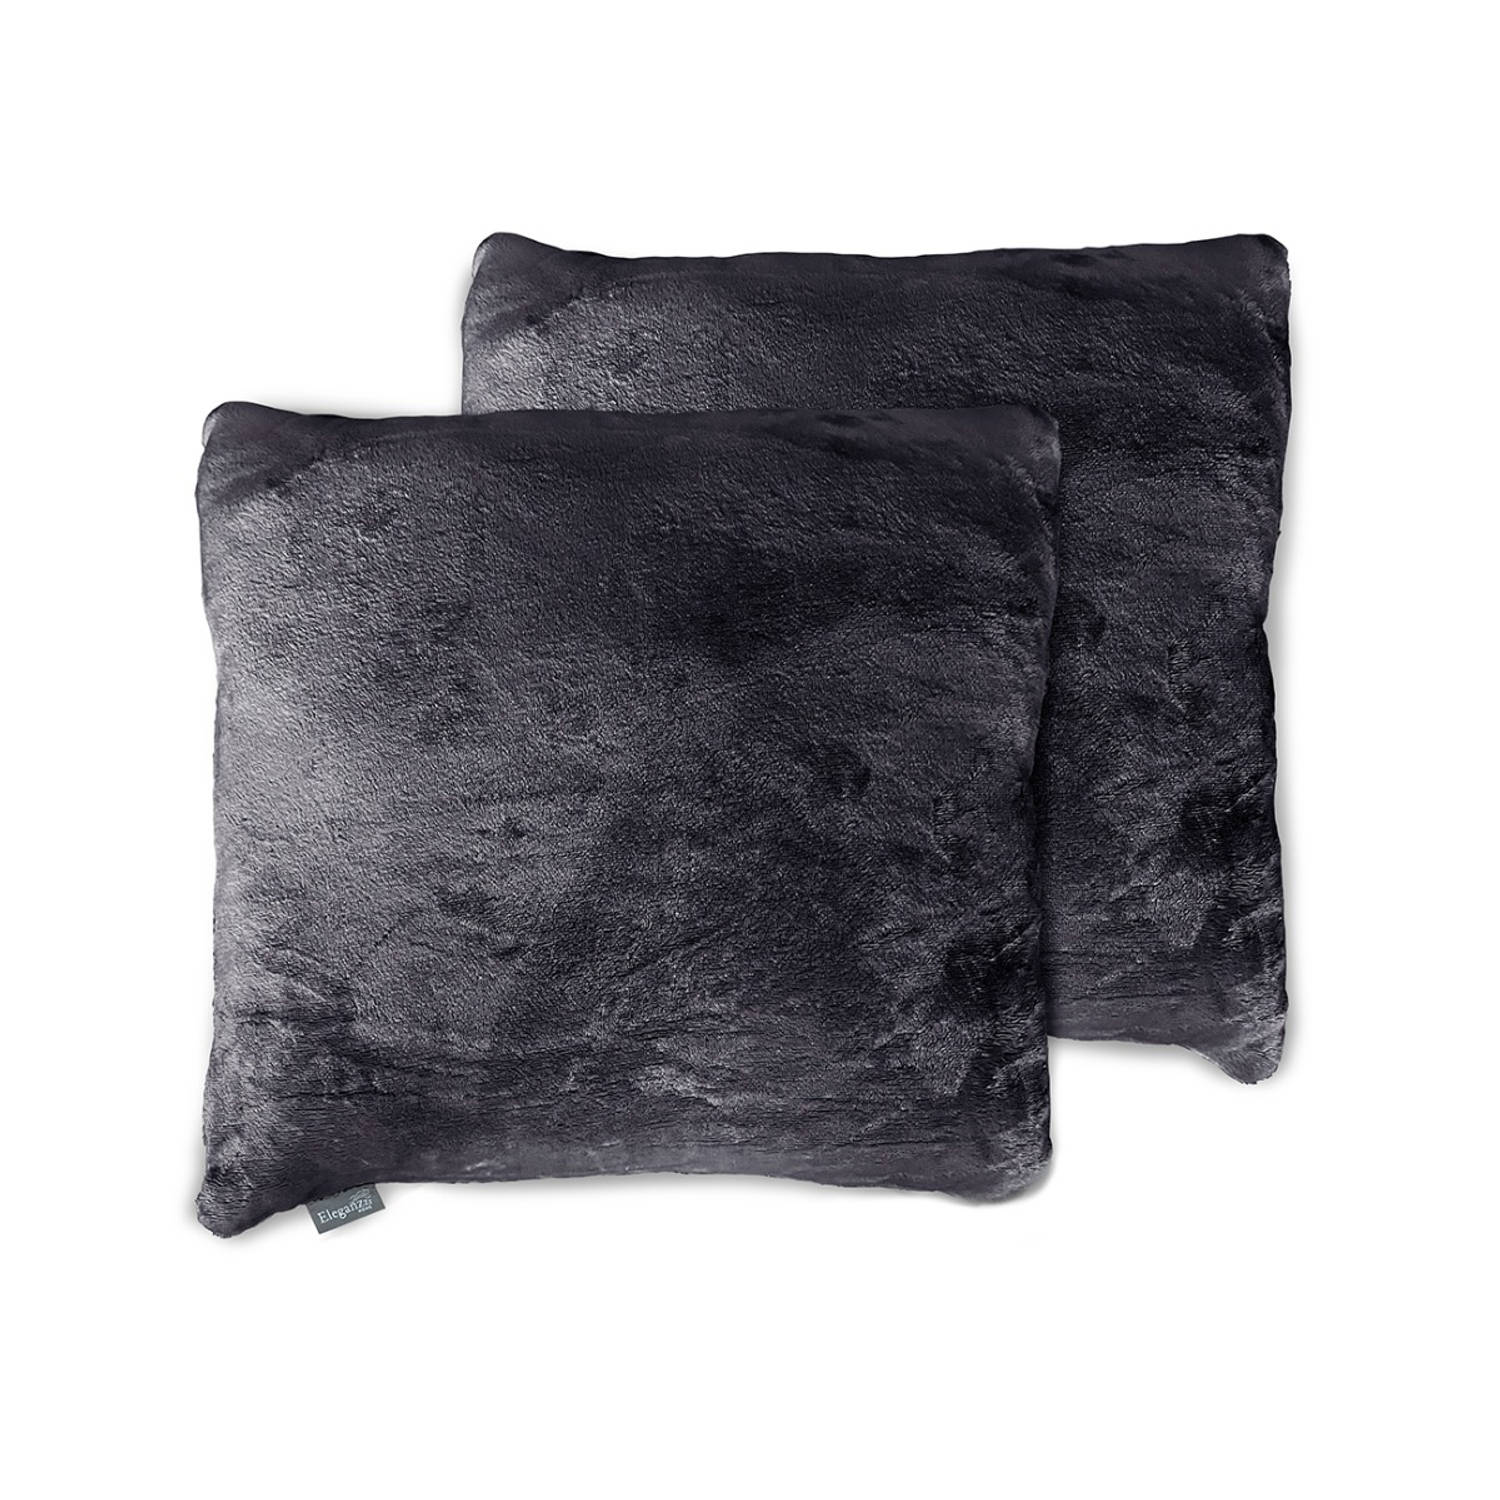 Eleganzzz Sierkussens Flanel Fleece - Dark Grey - Sierkussens 50x50cm - Set van 2 Kussens - 100% Flanel Fleece Voorzijde - 100% Velvet Achterzijde